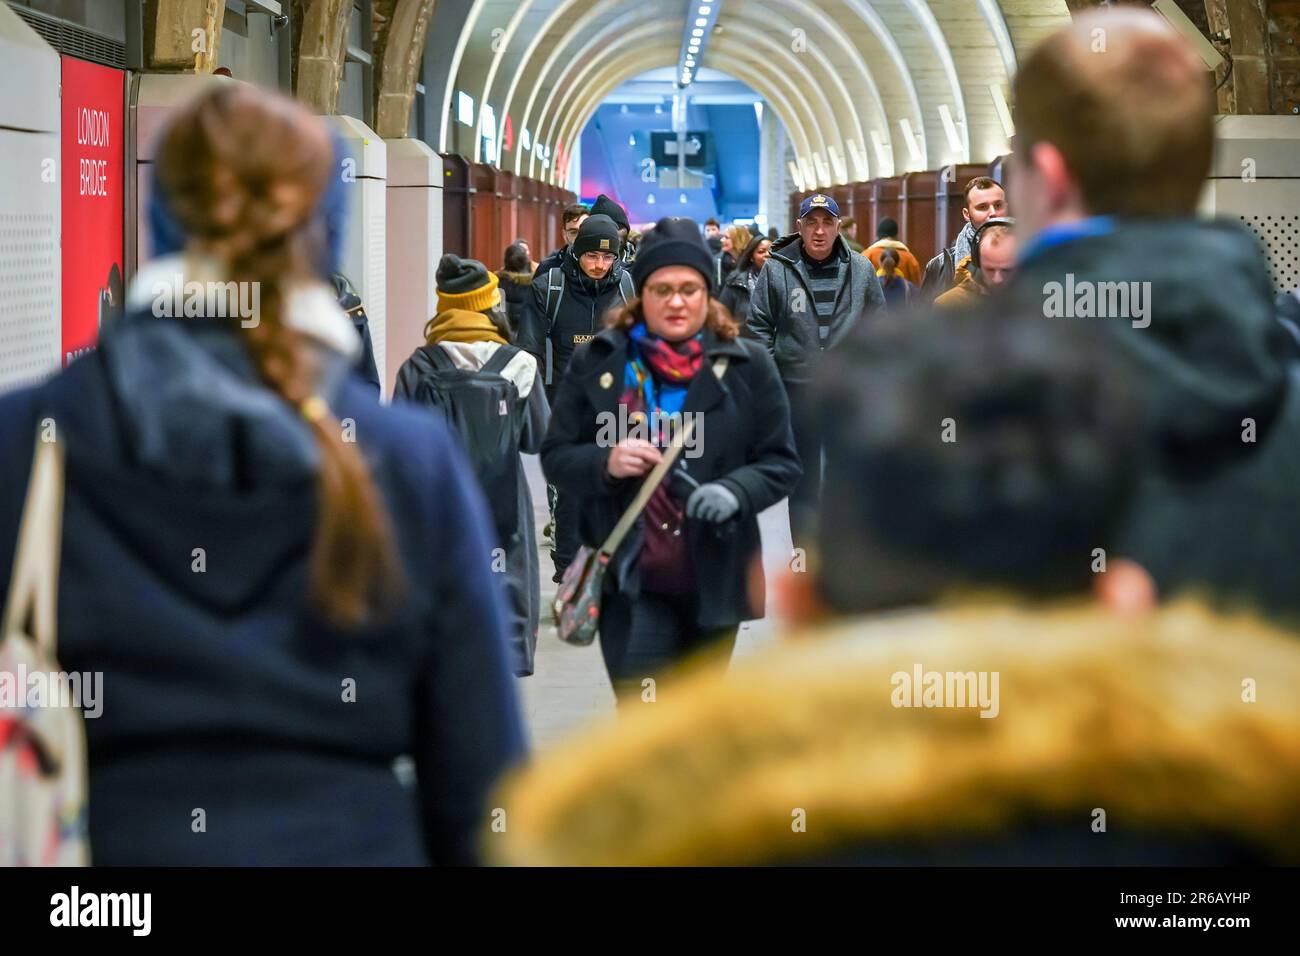 London, United Kingdom - February 02, 2019: Commuters wearing winter jackets walking in tunnel leading to London underground tube station Stock Photo